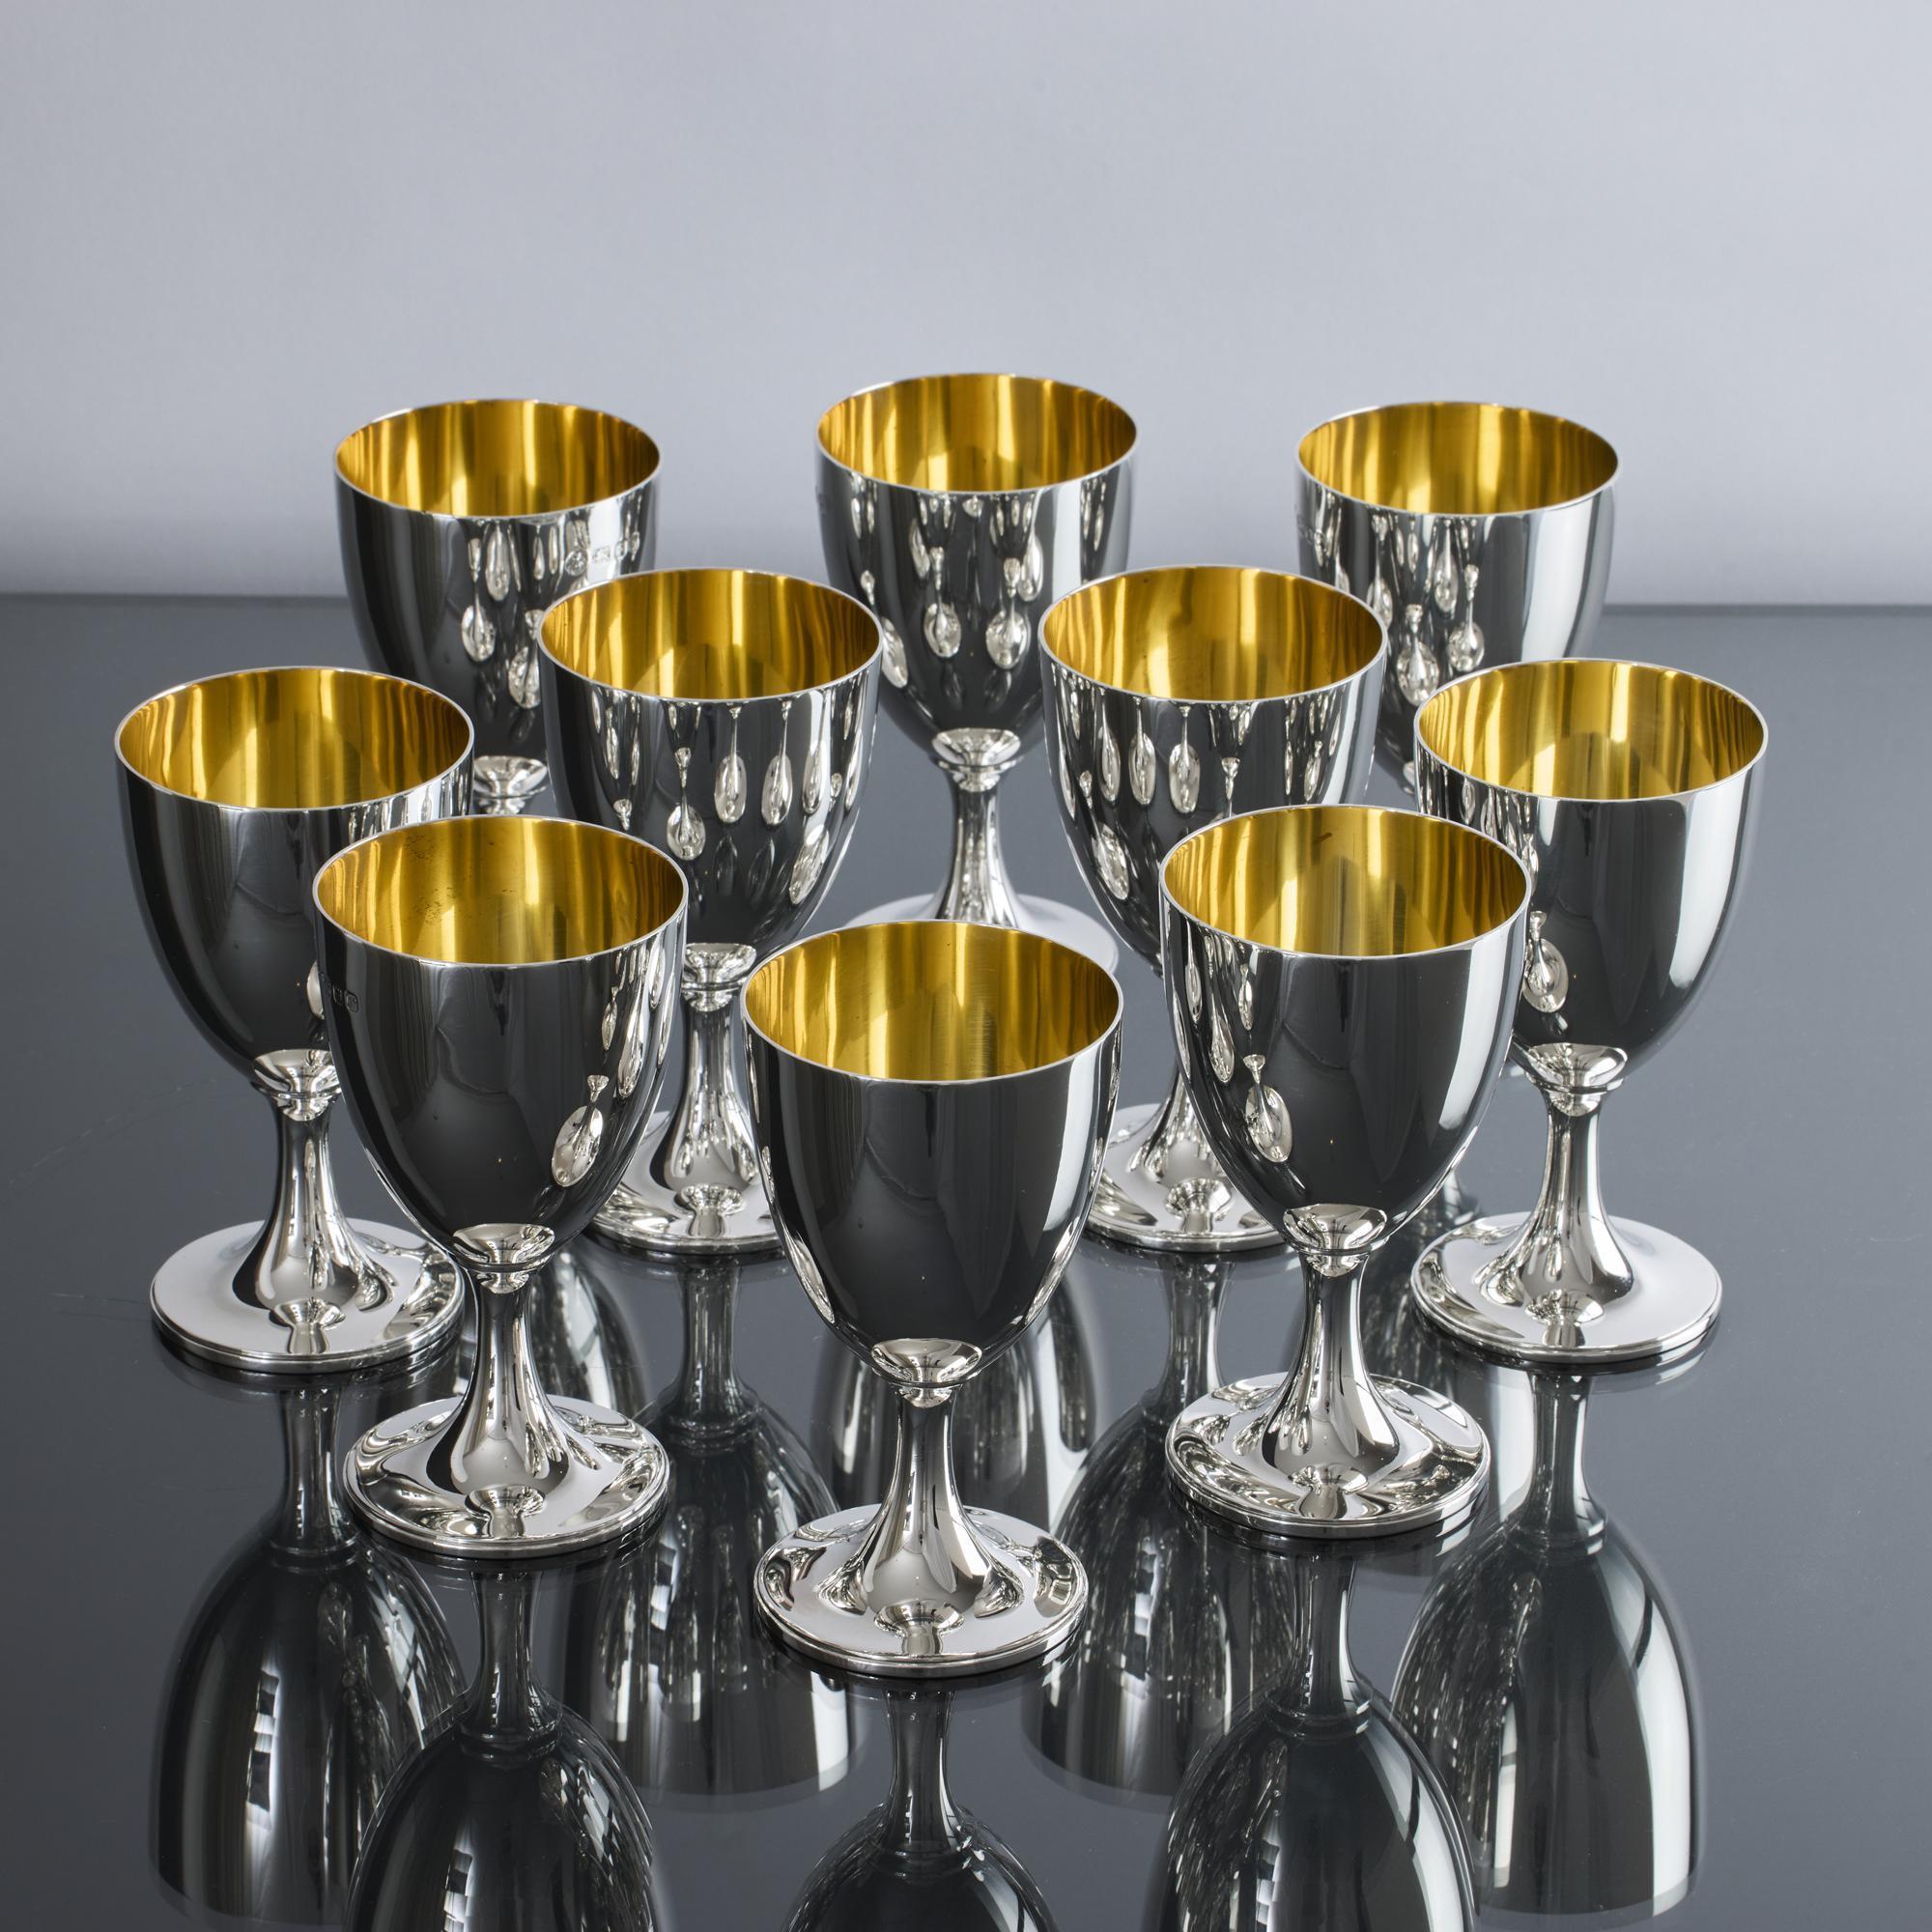 Set of ten gilt-lined silver wine goblets